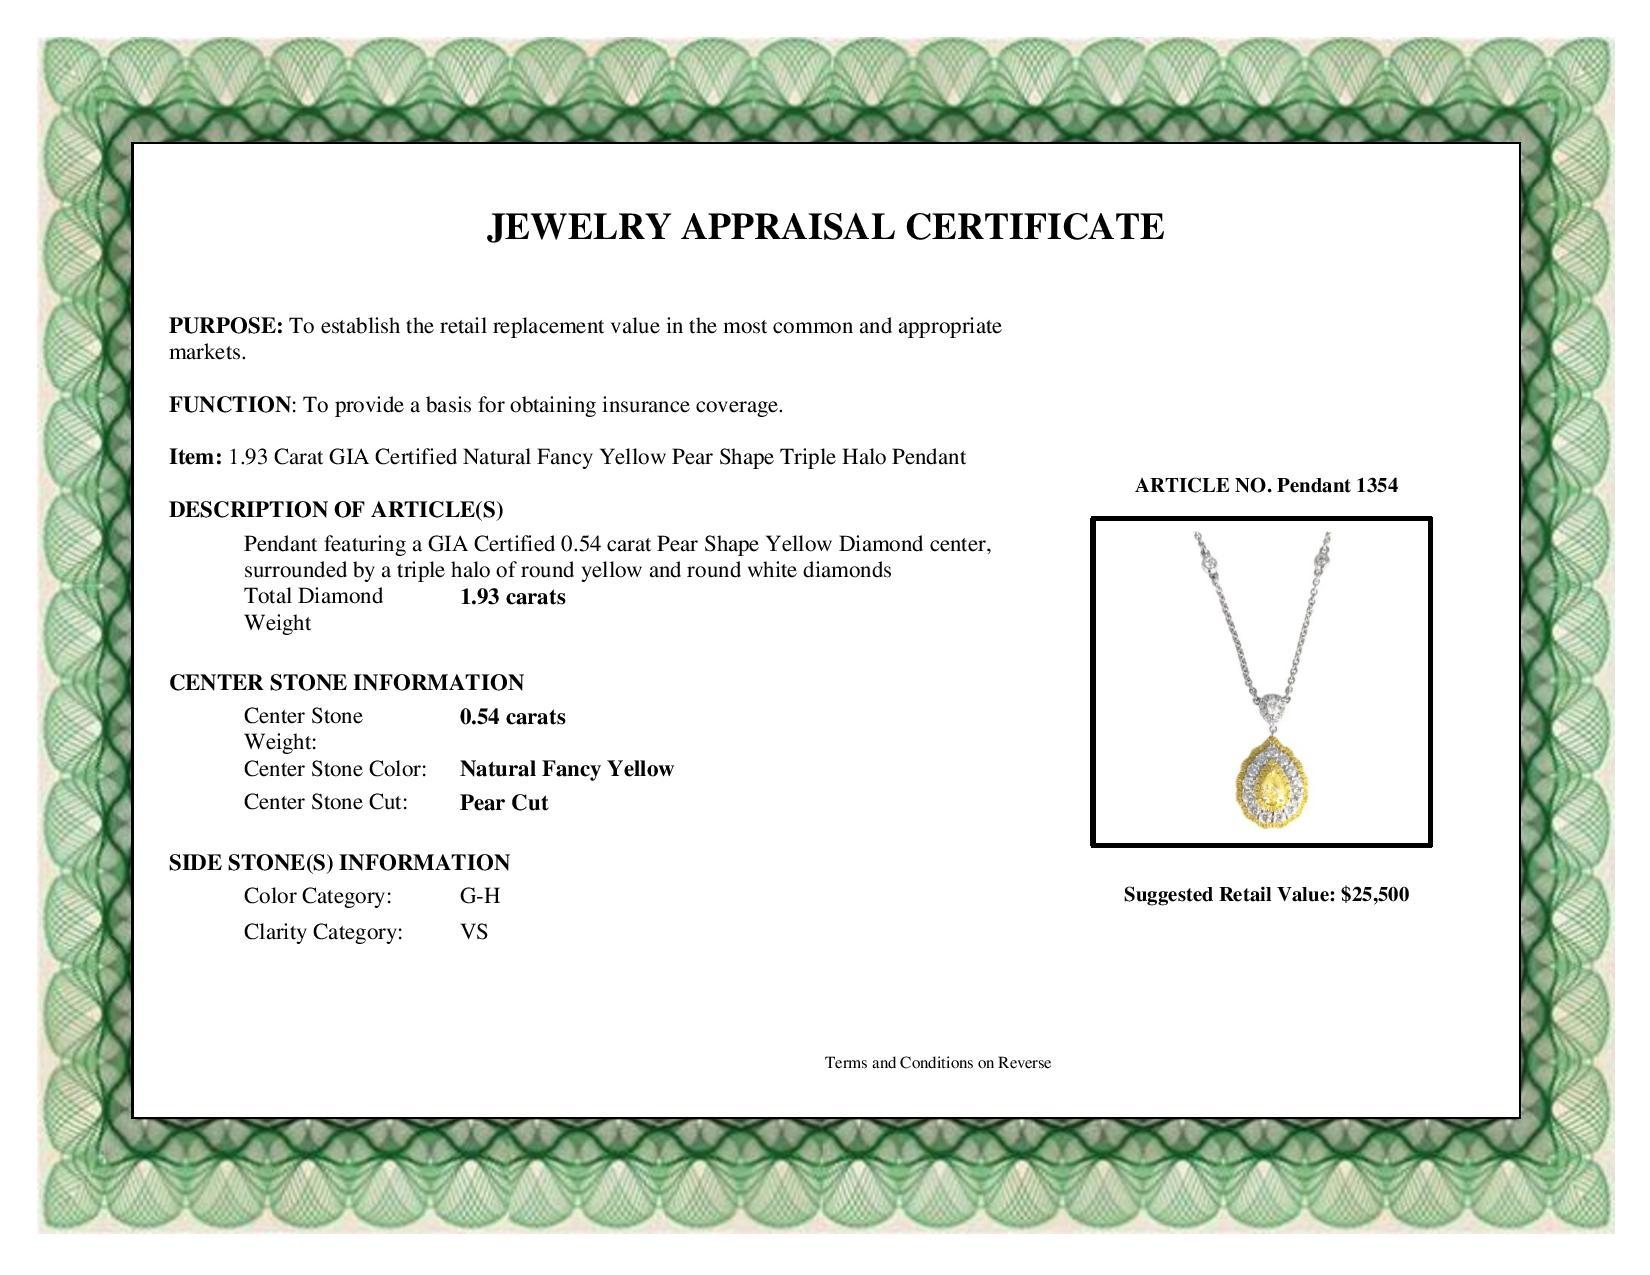 DiamondTown 1.93 Carat GIA Certified Natural Fancy Yellow Pear Shape Pendant 1